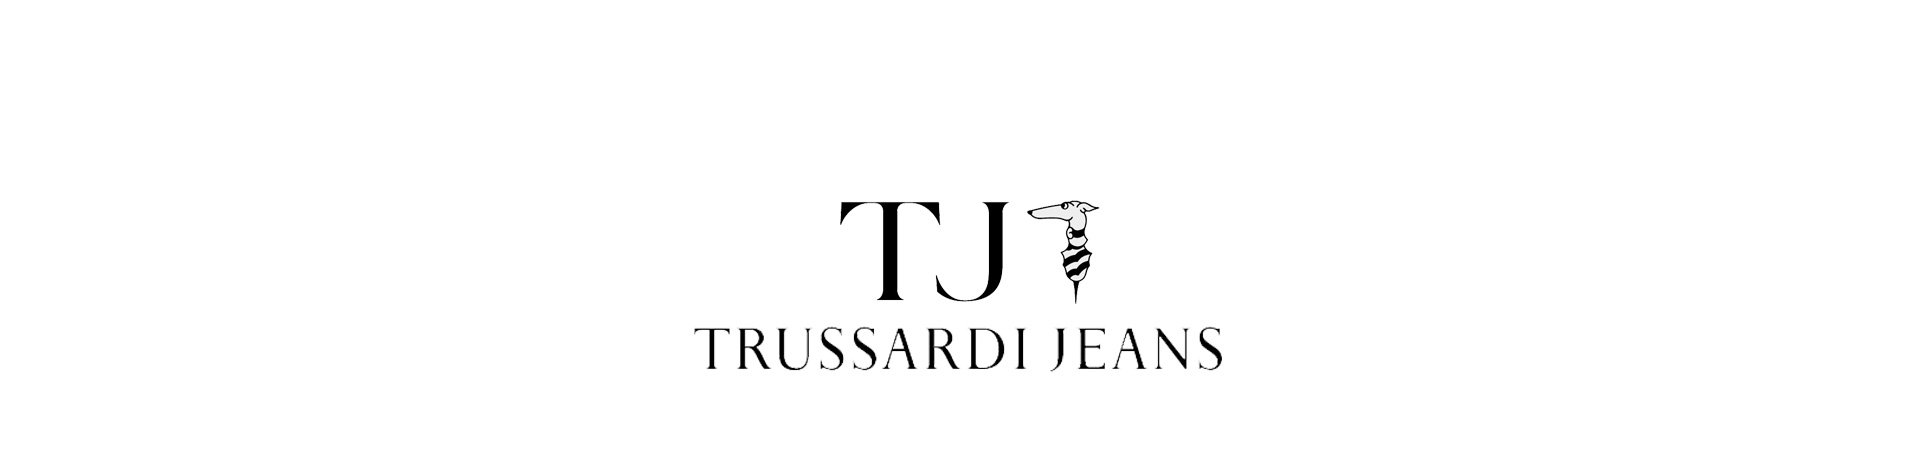 Труссарди логотип. Лейбл бренда Труссарди. Trussardi логотип. Труссарди фирменный знак. Труссарди джинс логотип.